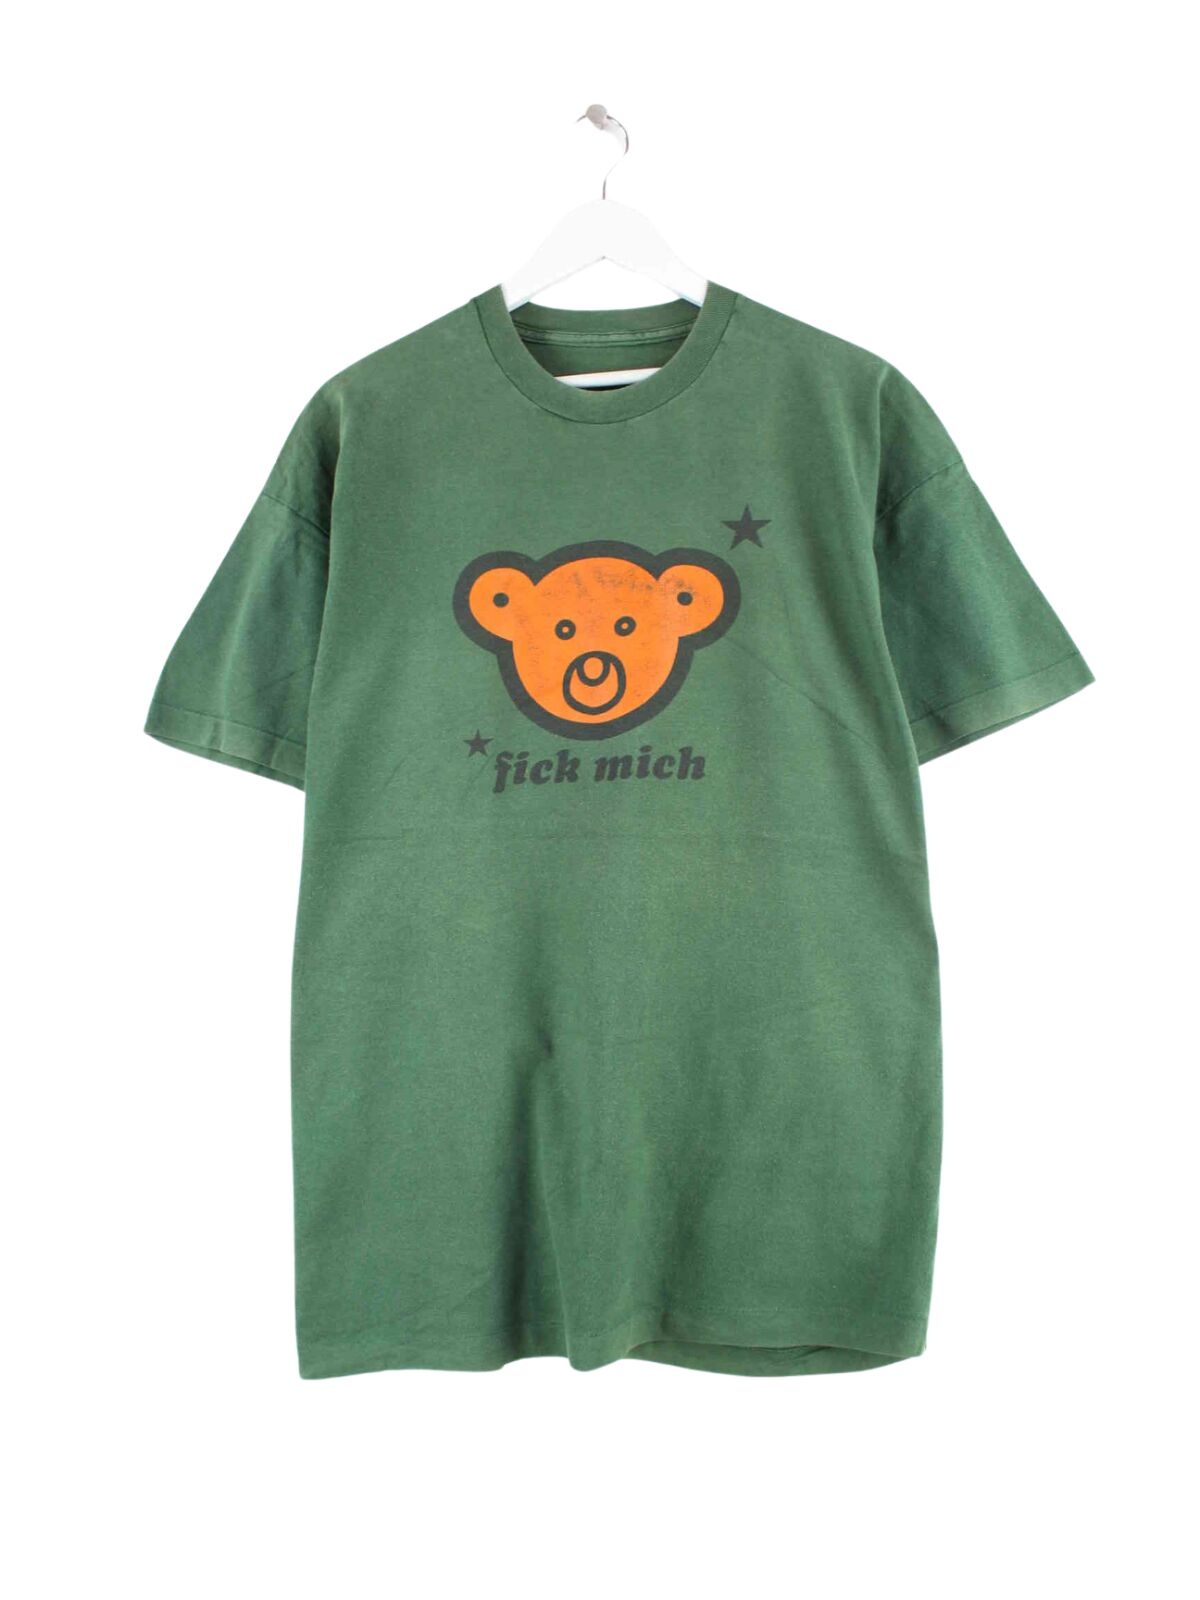 Vintage 90s Funny Teddy Print Single Stitched T-Shirt Grün L (front image)